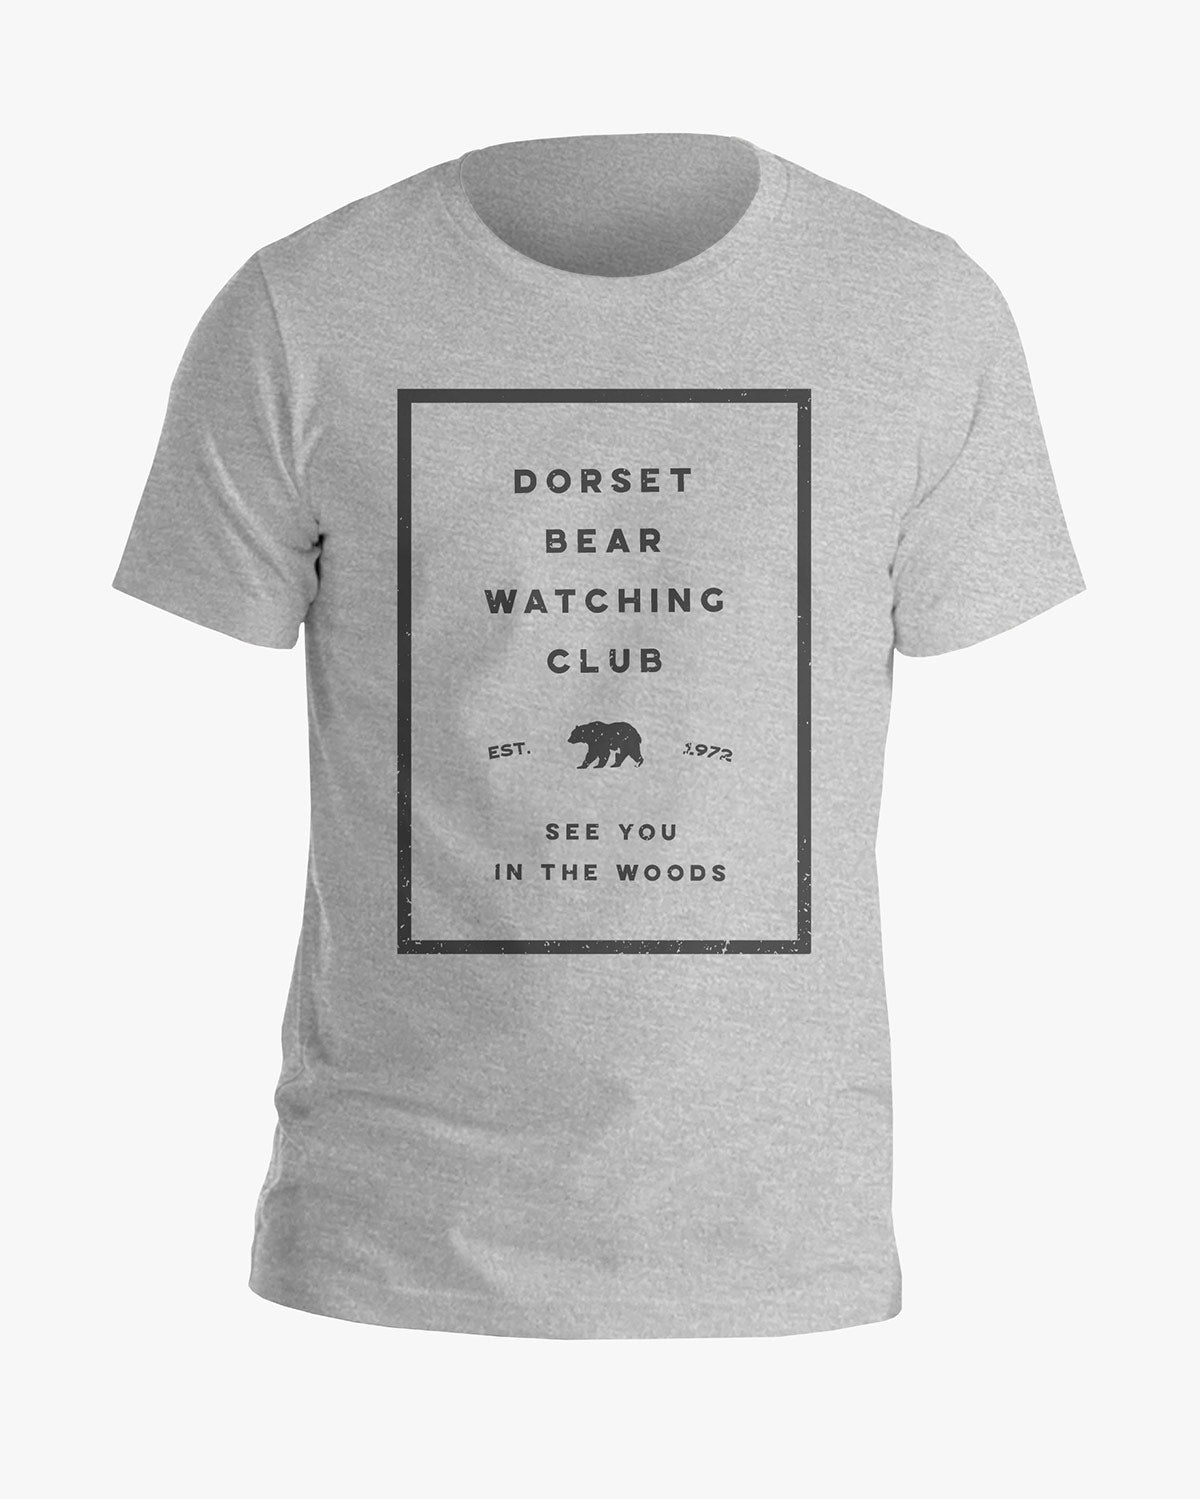 Bear Watching Club - Dorset - Tee